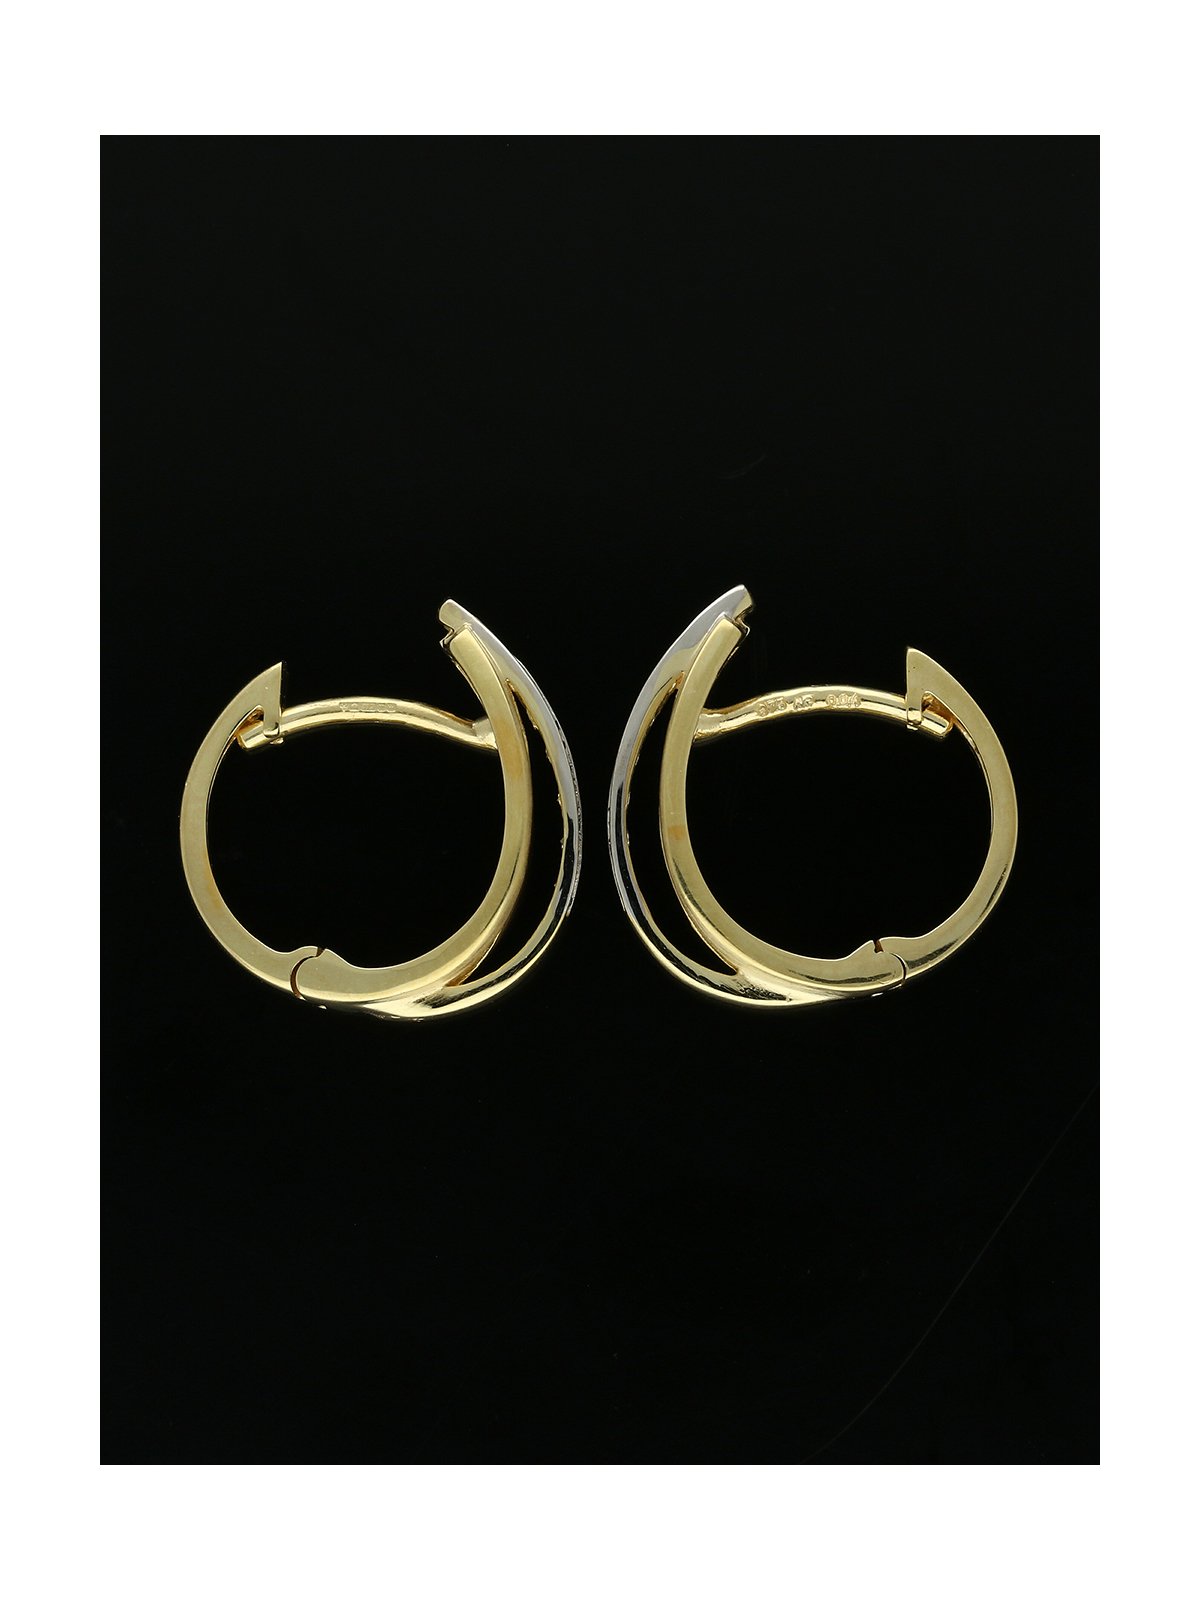 Diamond Huggie Hoop Earrings 0.08ct Round Brilliant Cut in 9ct Yellow Gold